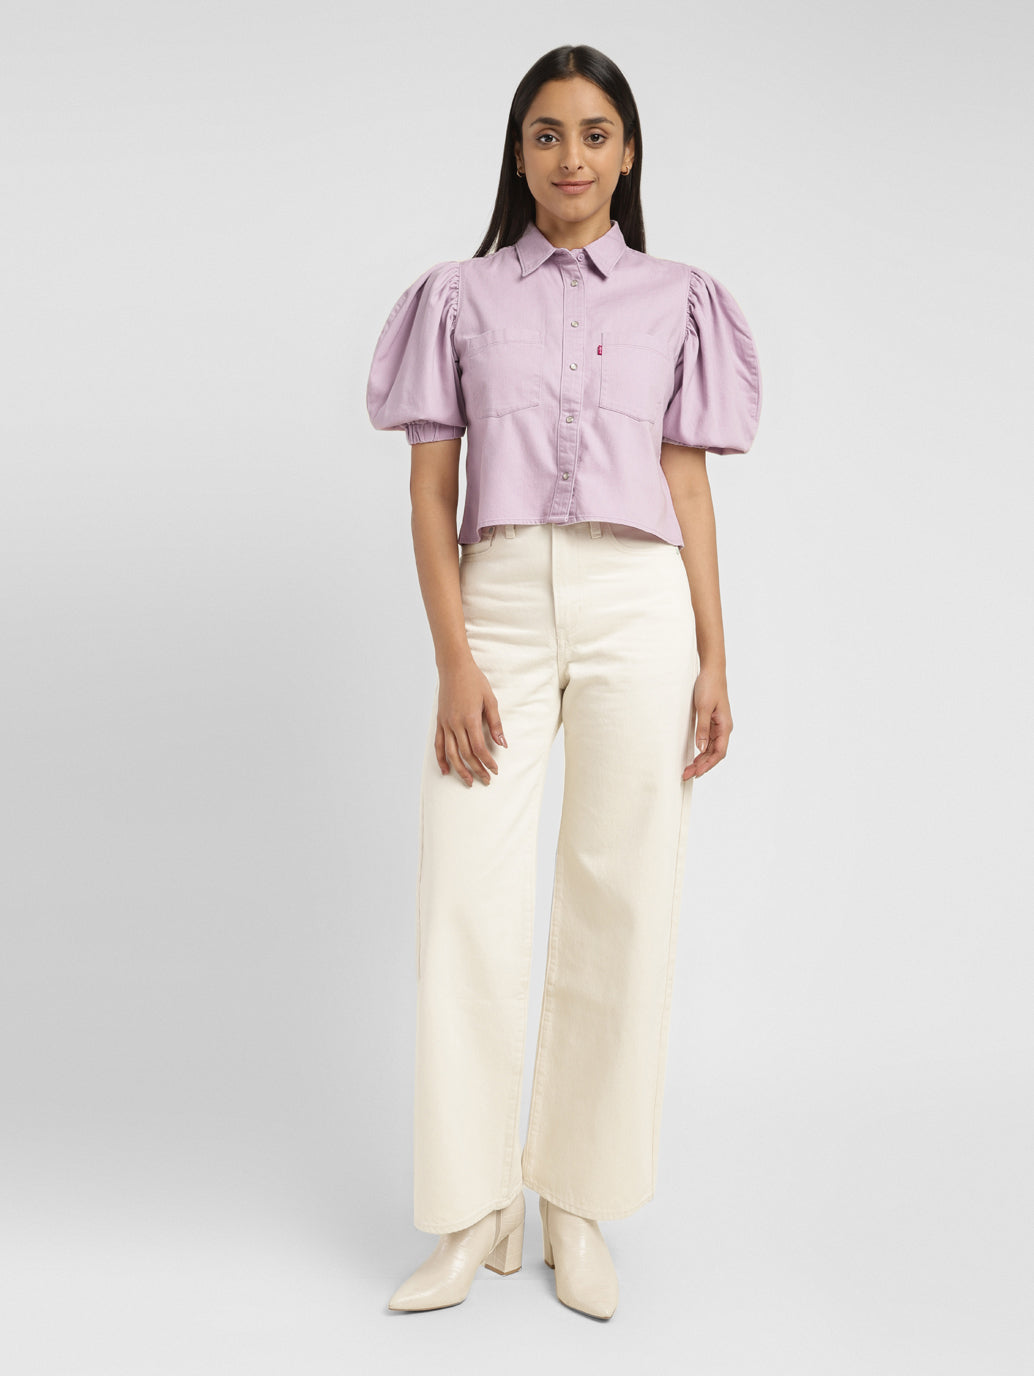 Women's Solid Lilac Spread Collar Top